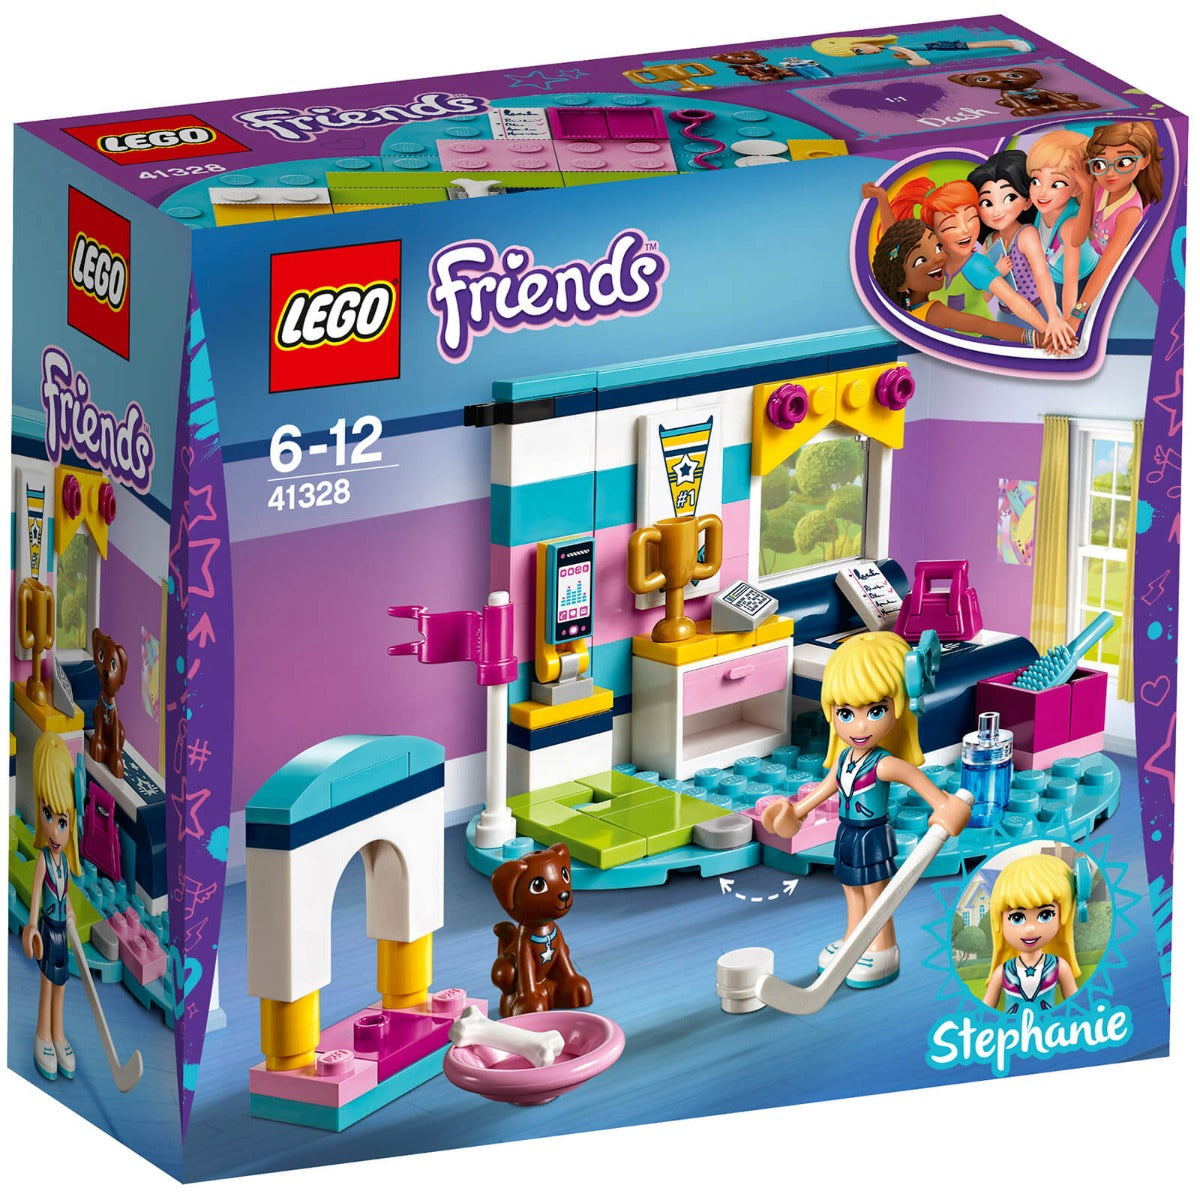 Lego Friends Stephanies Bedroom 41328